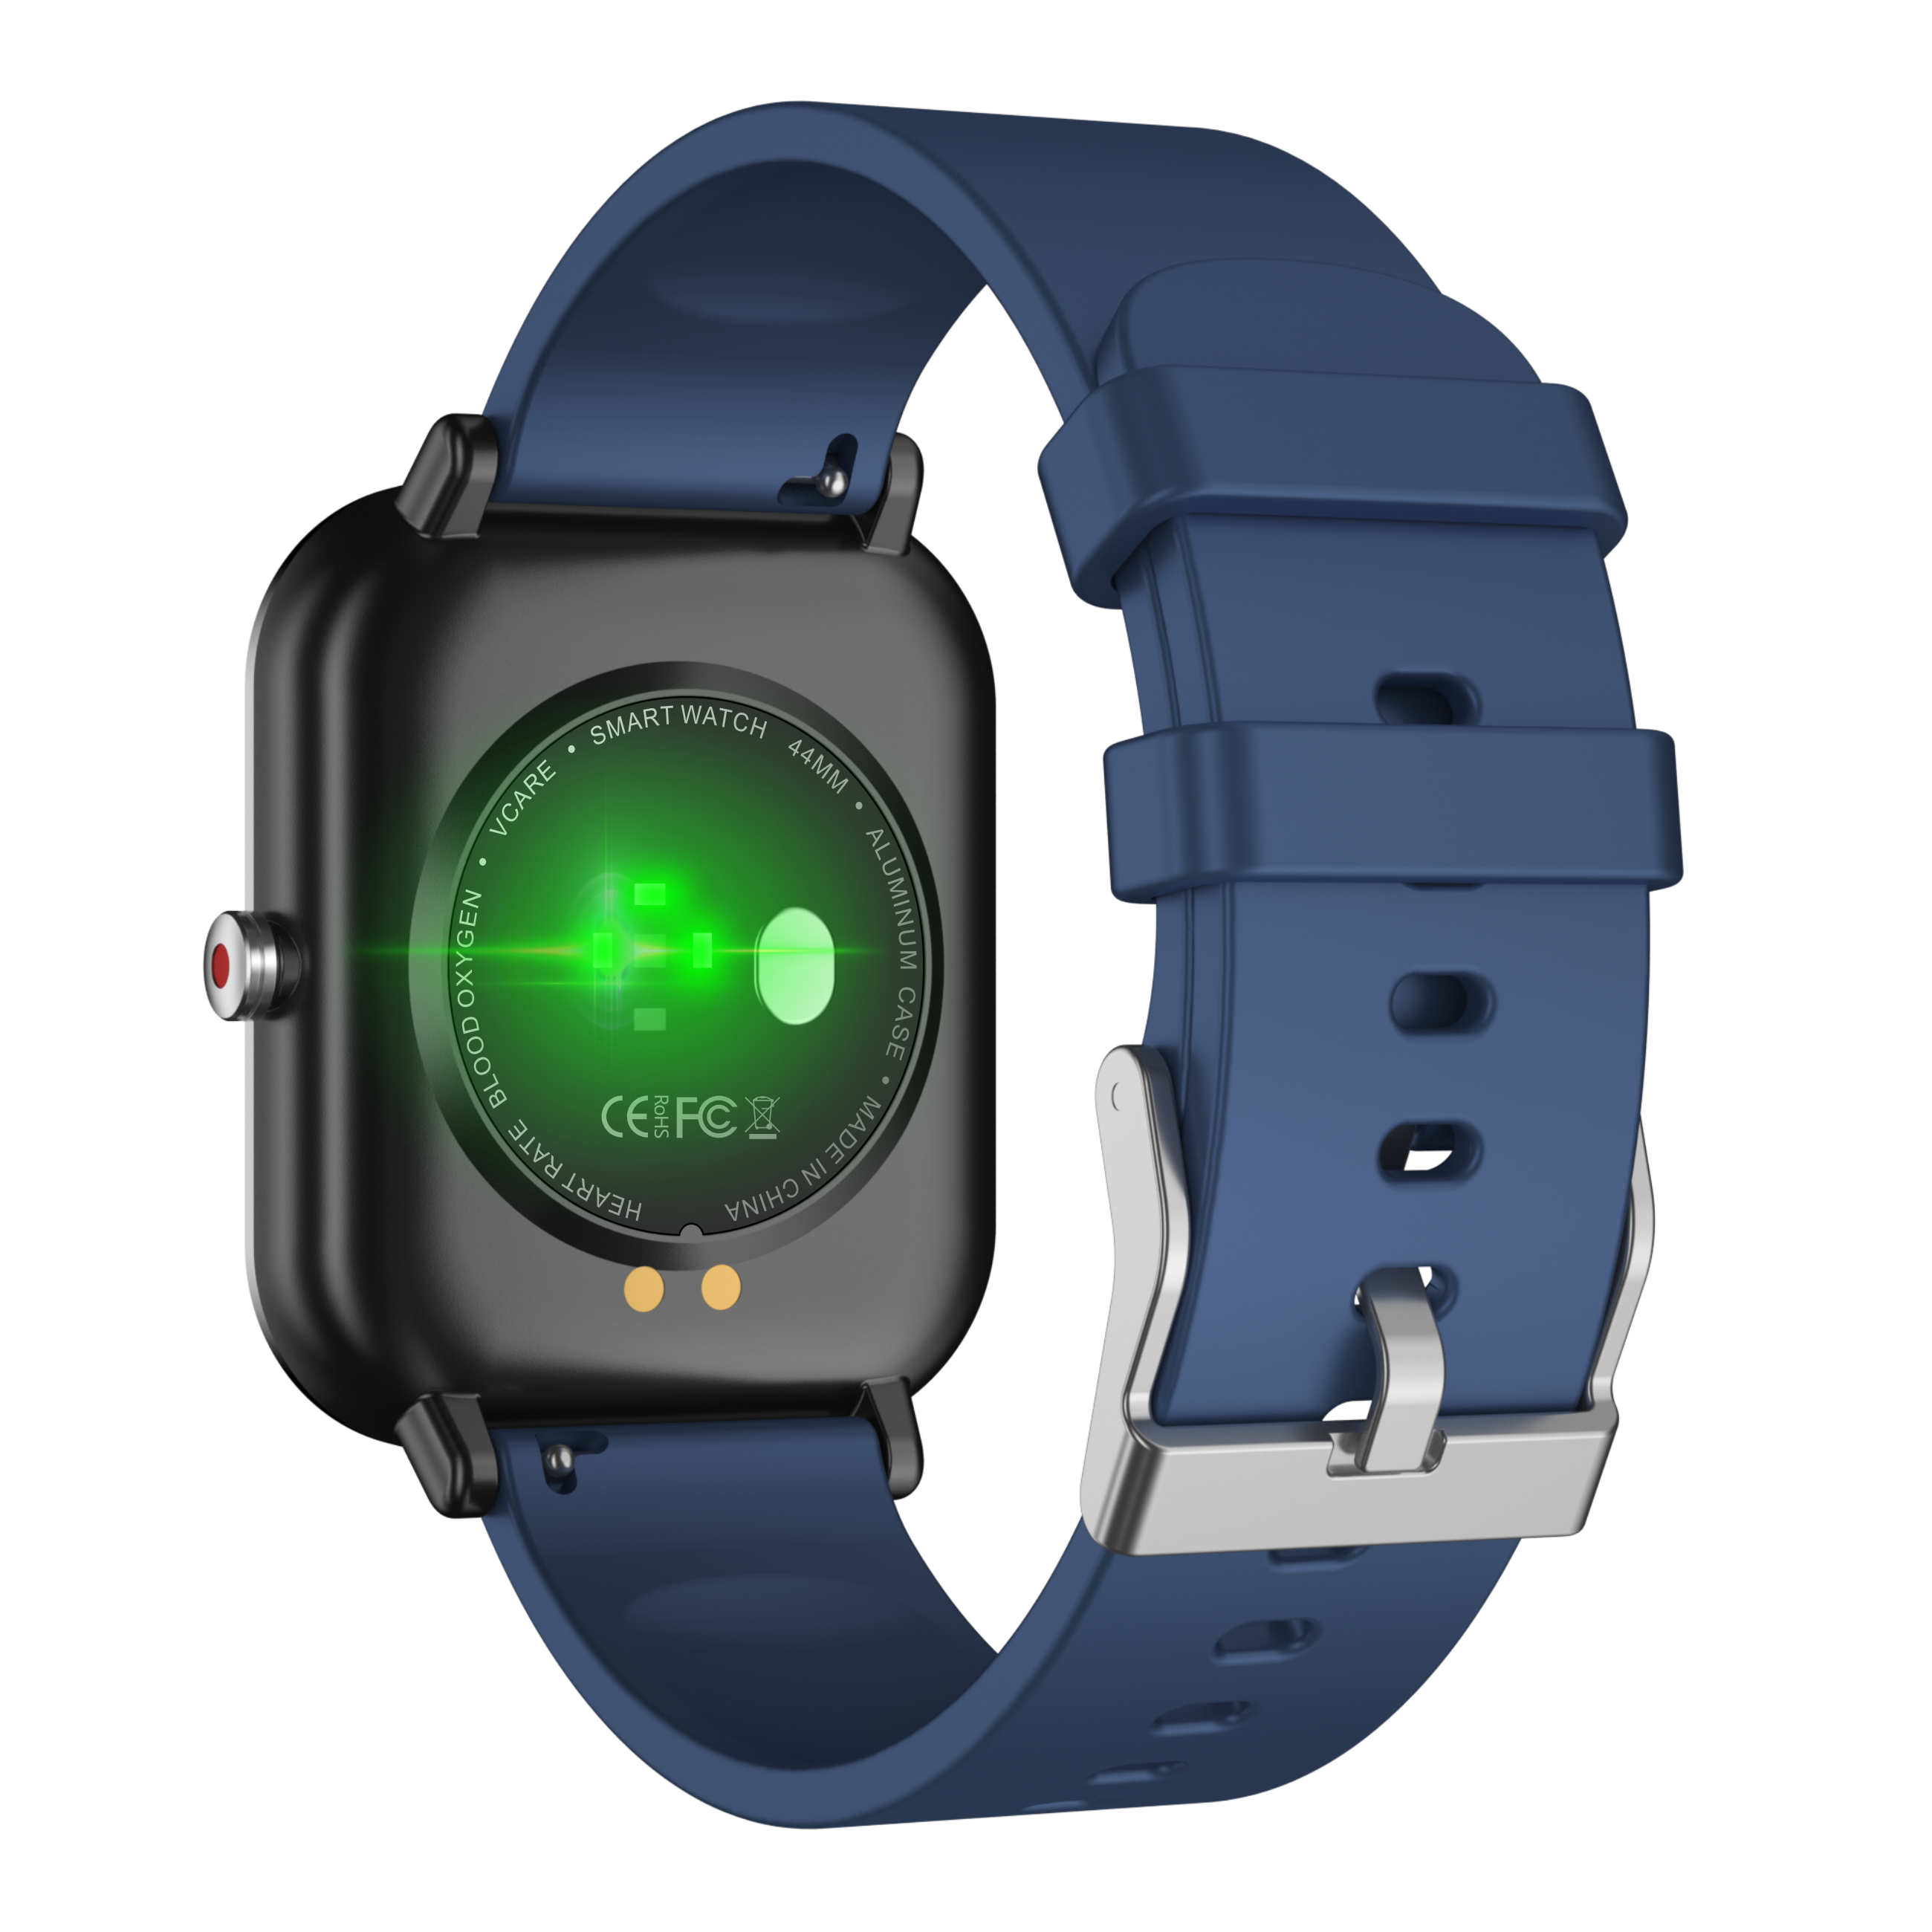 New Developed Heart Rate Monitor Smart Watch Wristwatch with Flashlight 